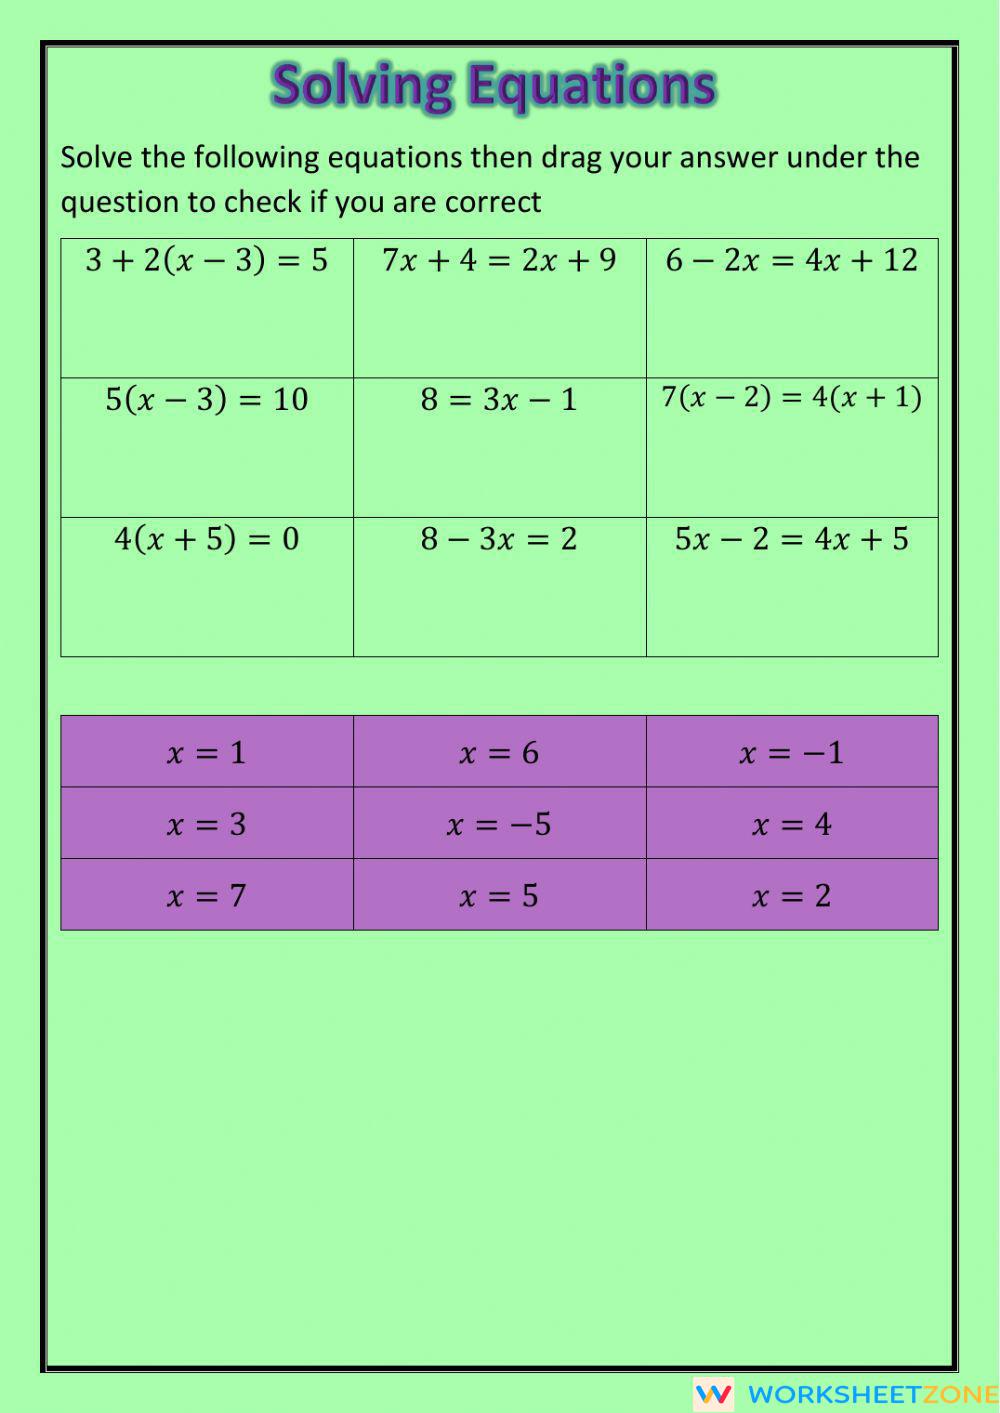 national-5-solving-equations-worksheet-zone